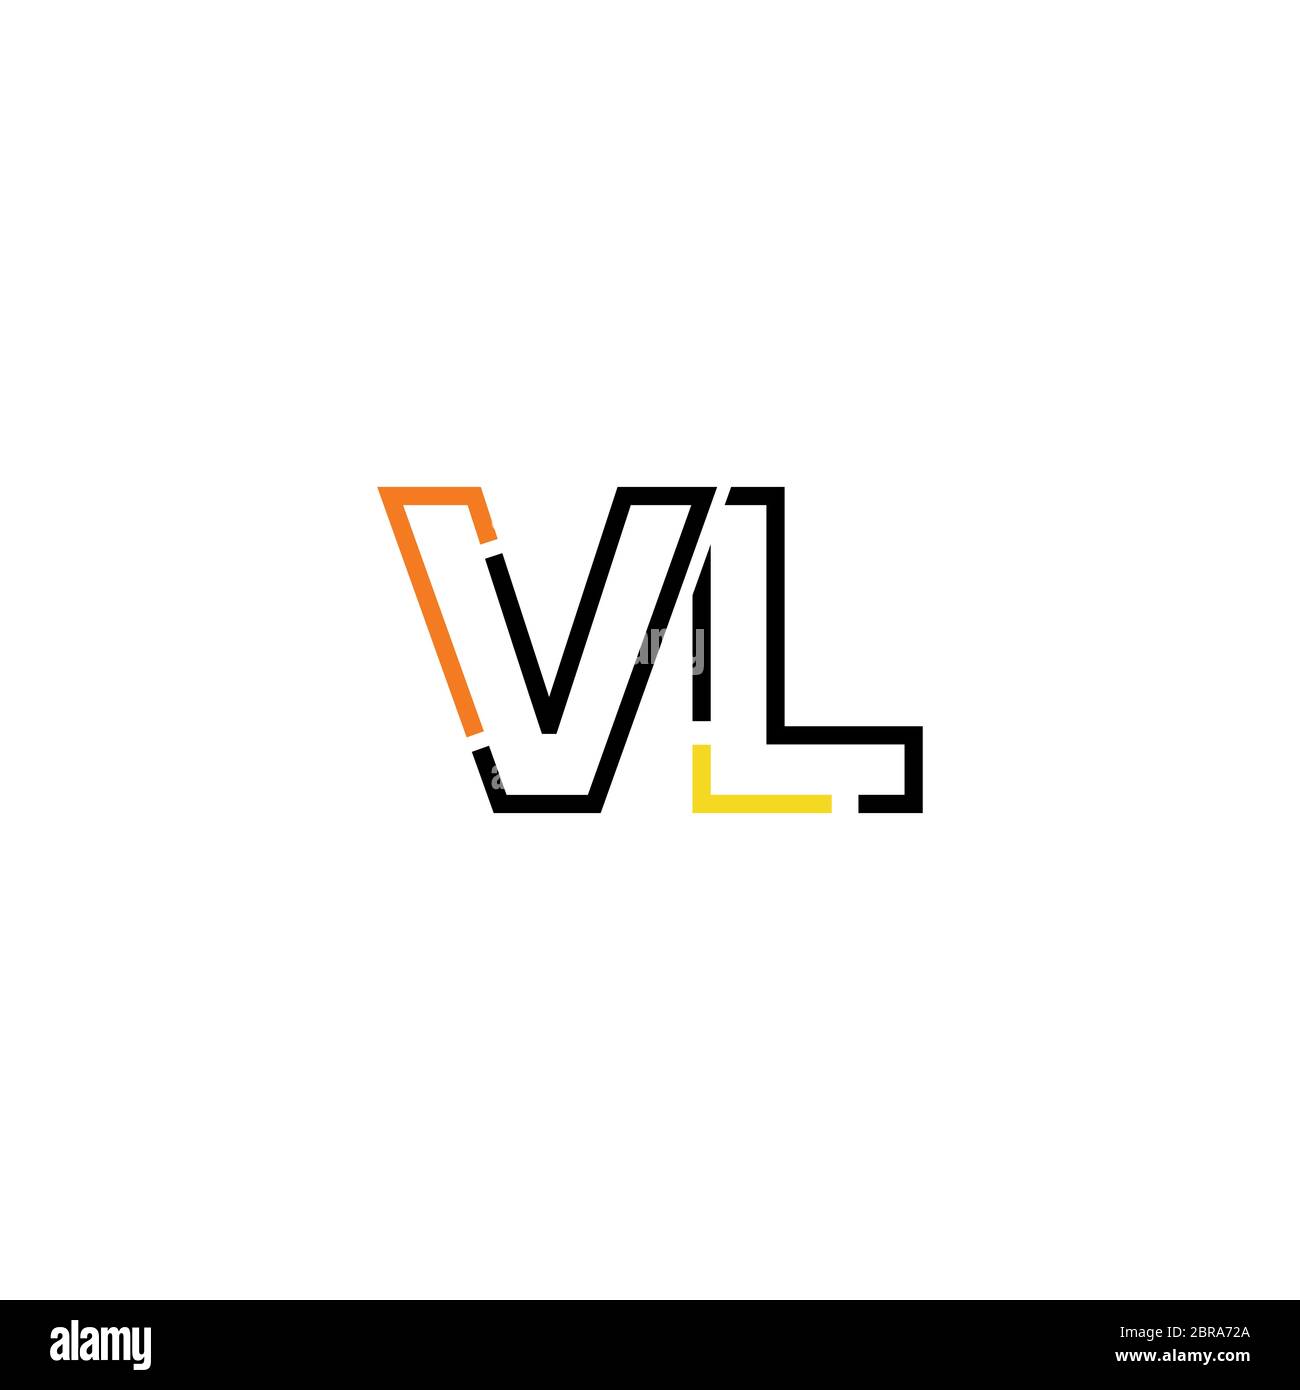 Premium Vector  Initial vl logo design, suitable for logo company